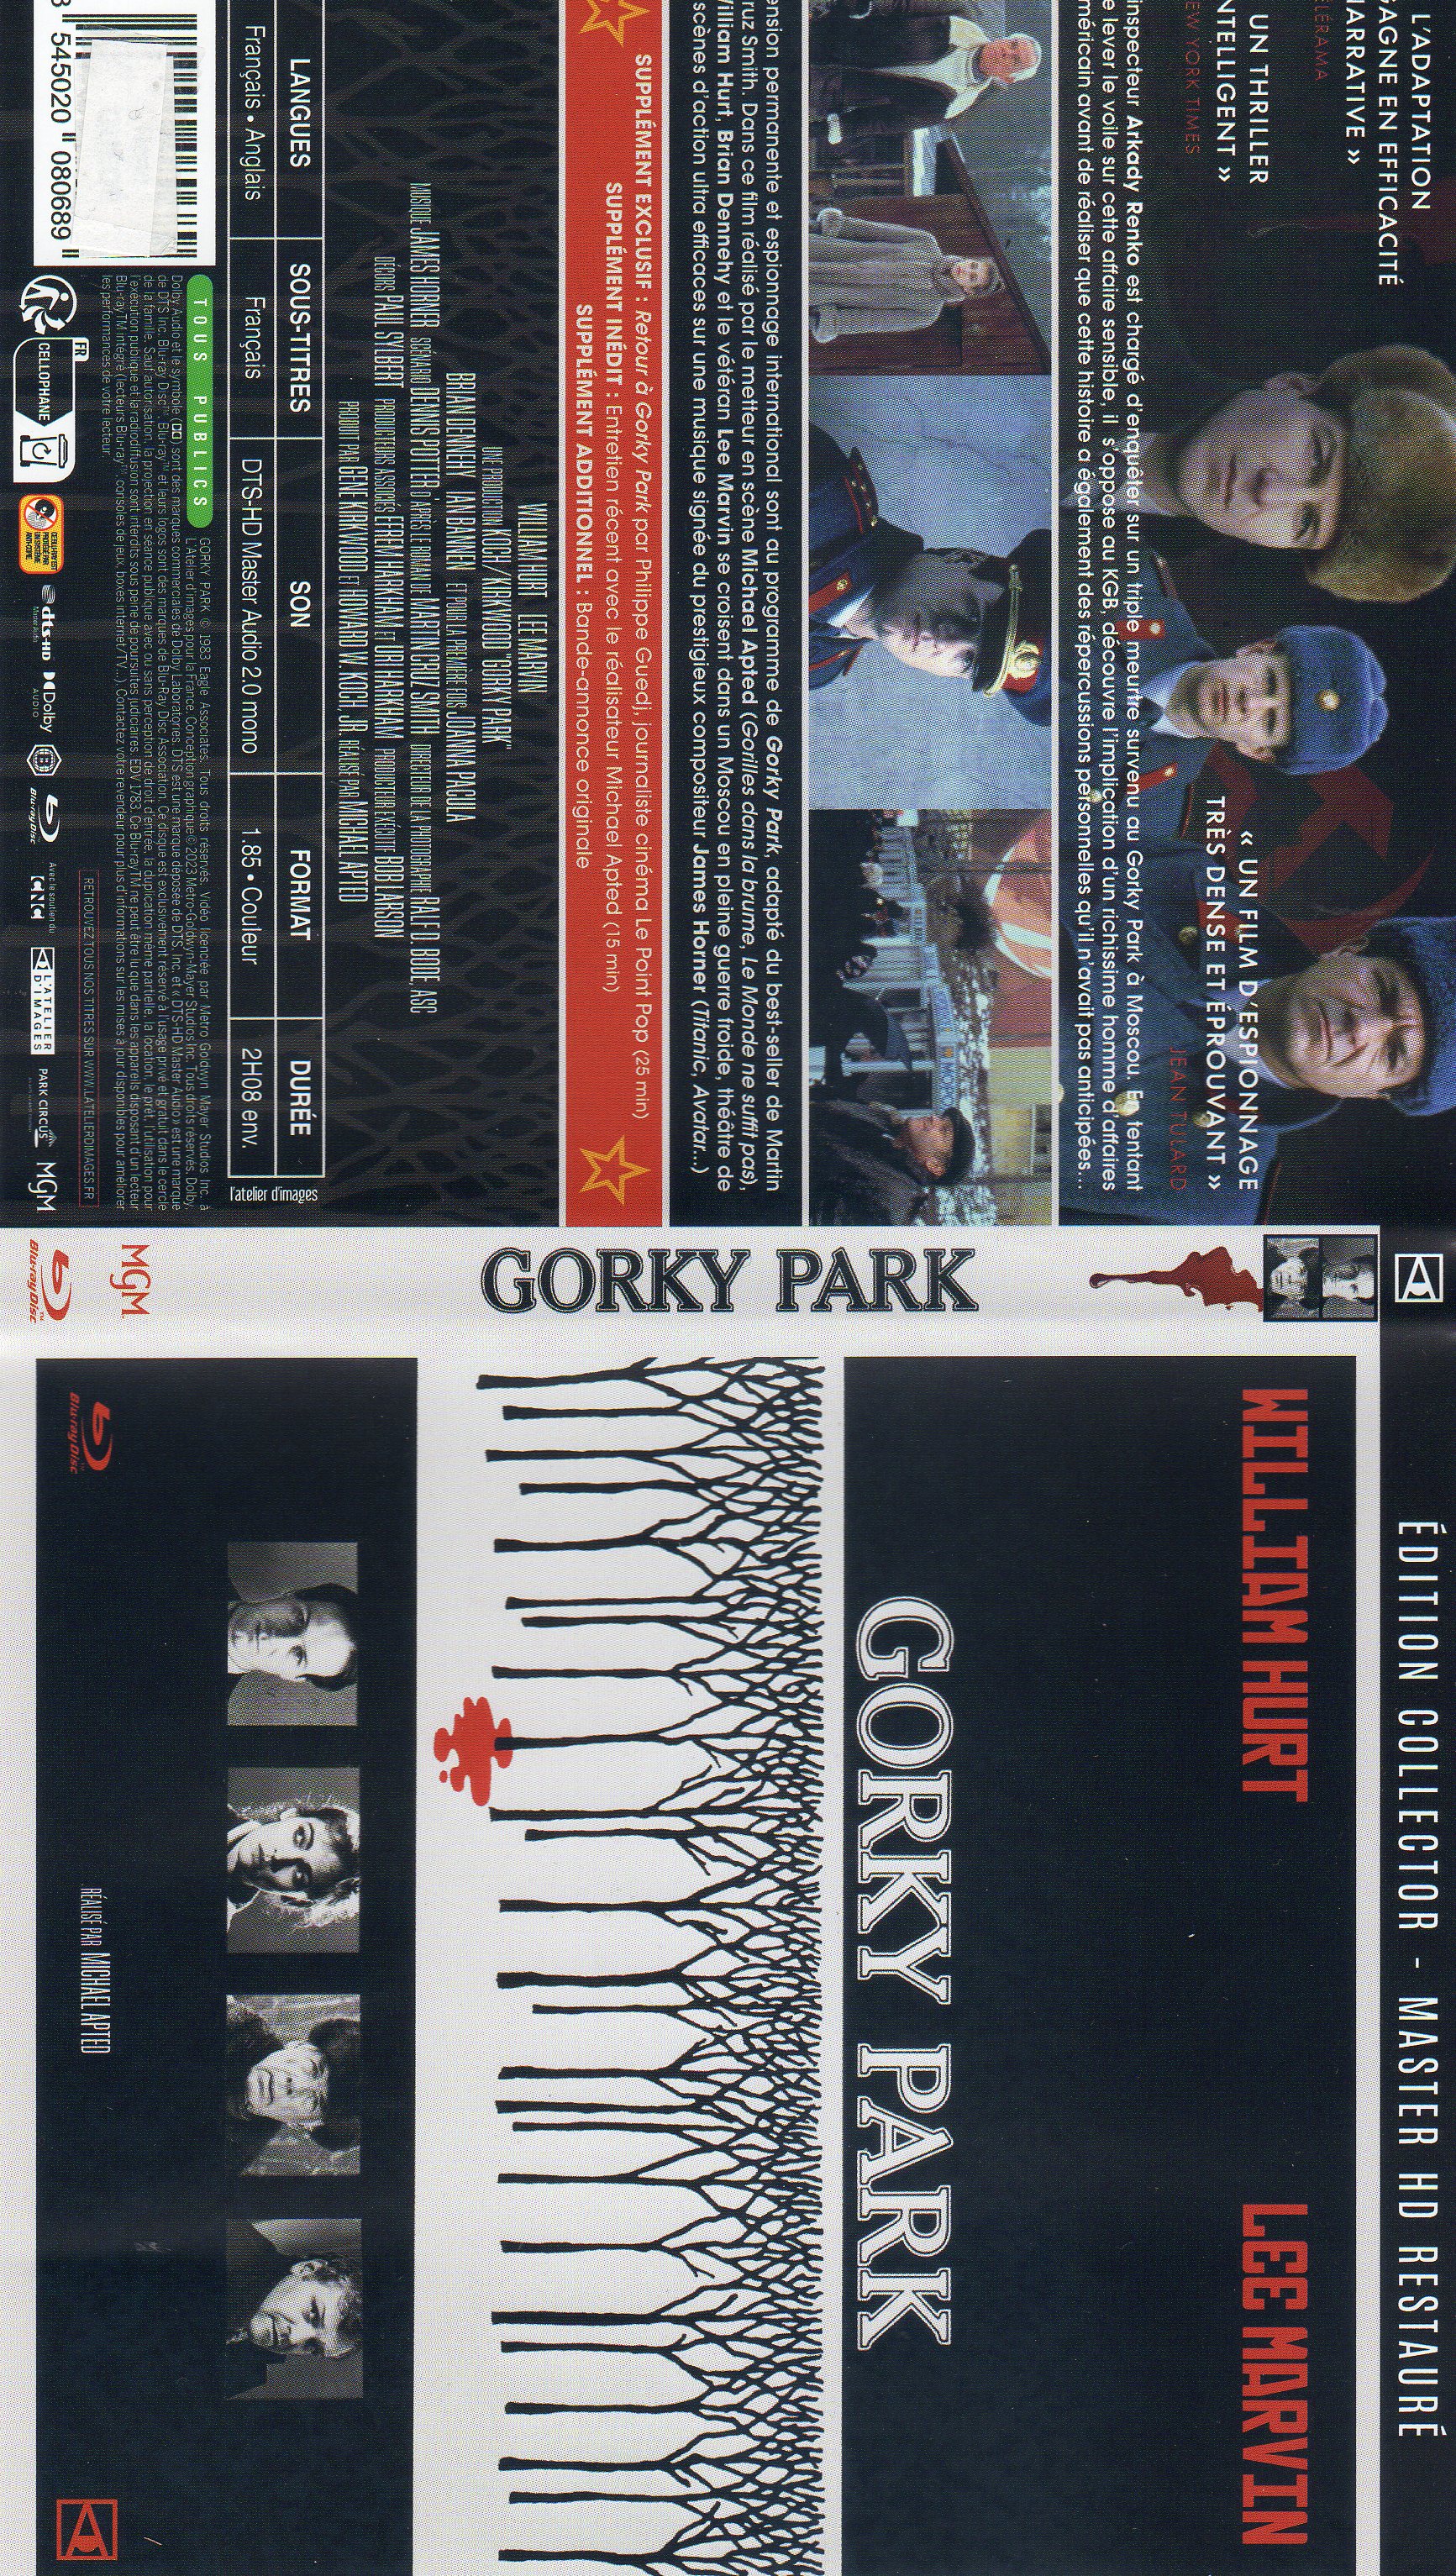 Jaquette DVD Gorky park (BLU-RAY)